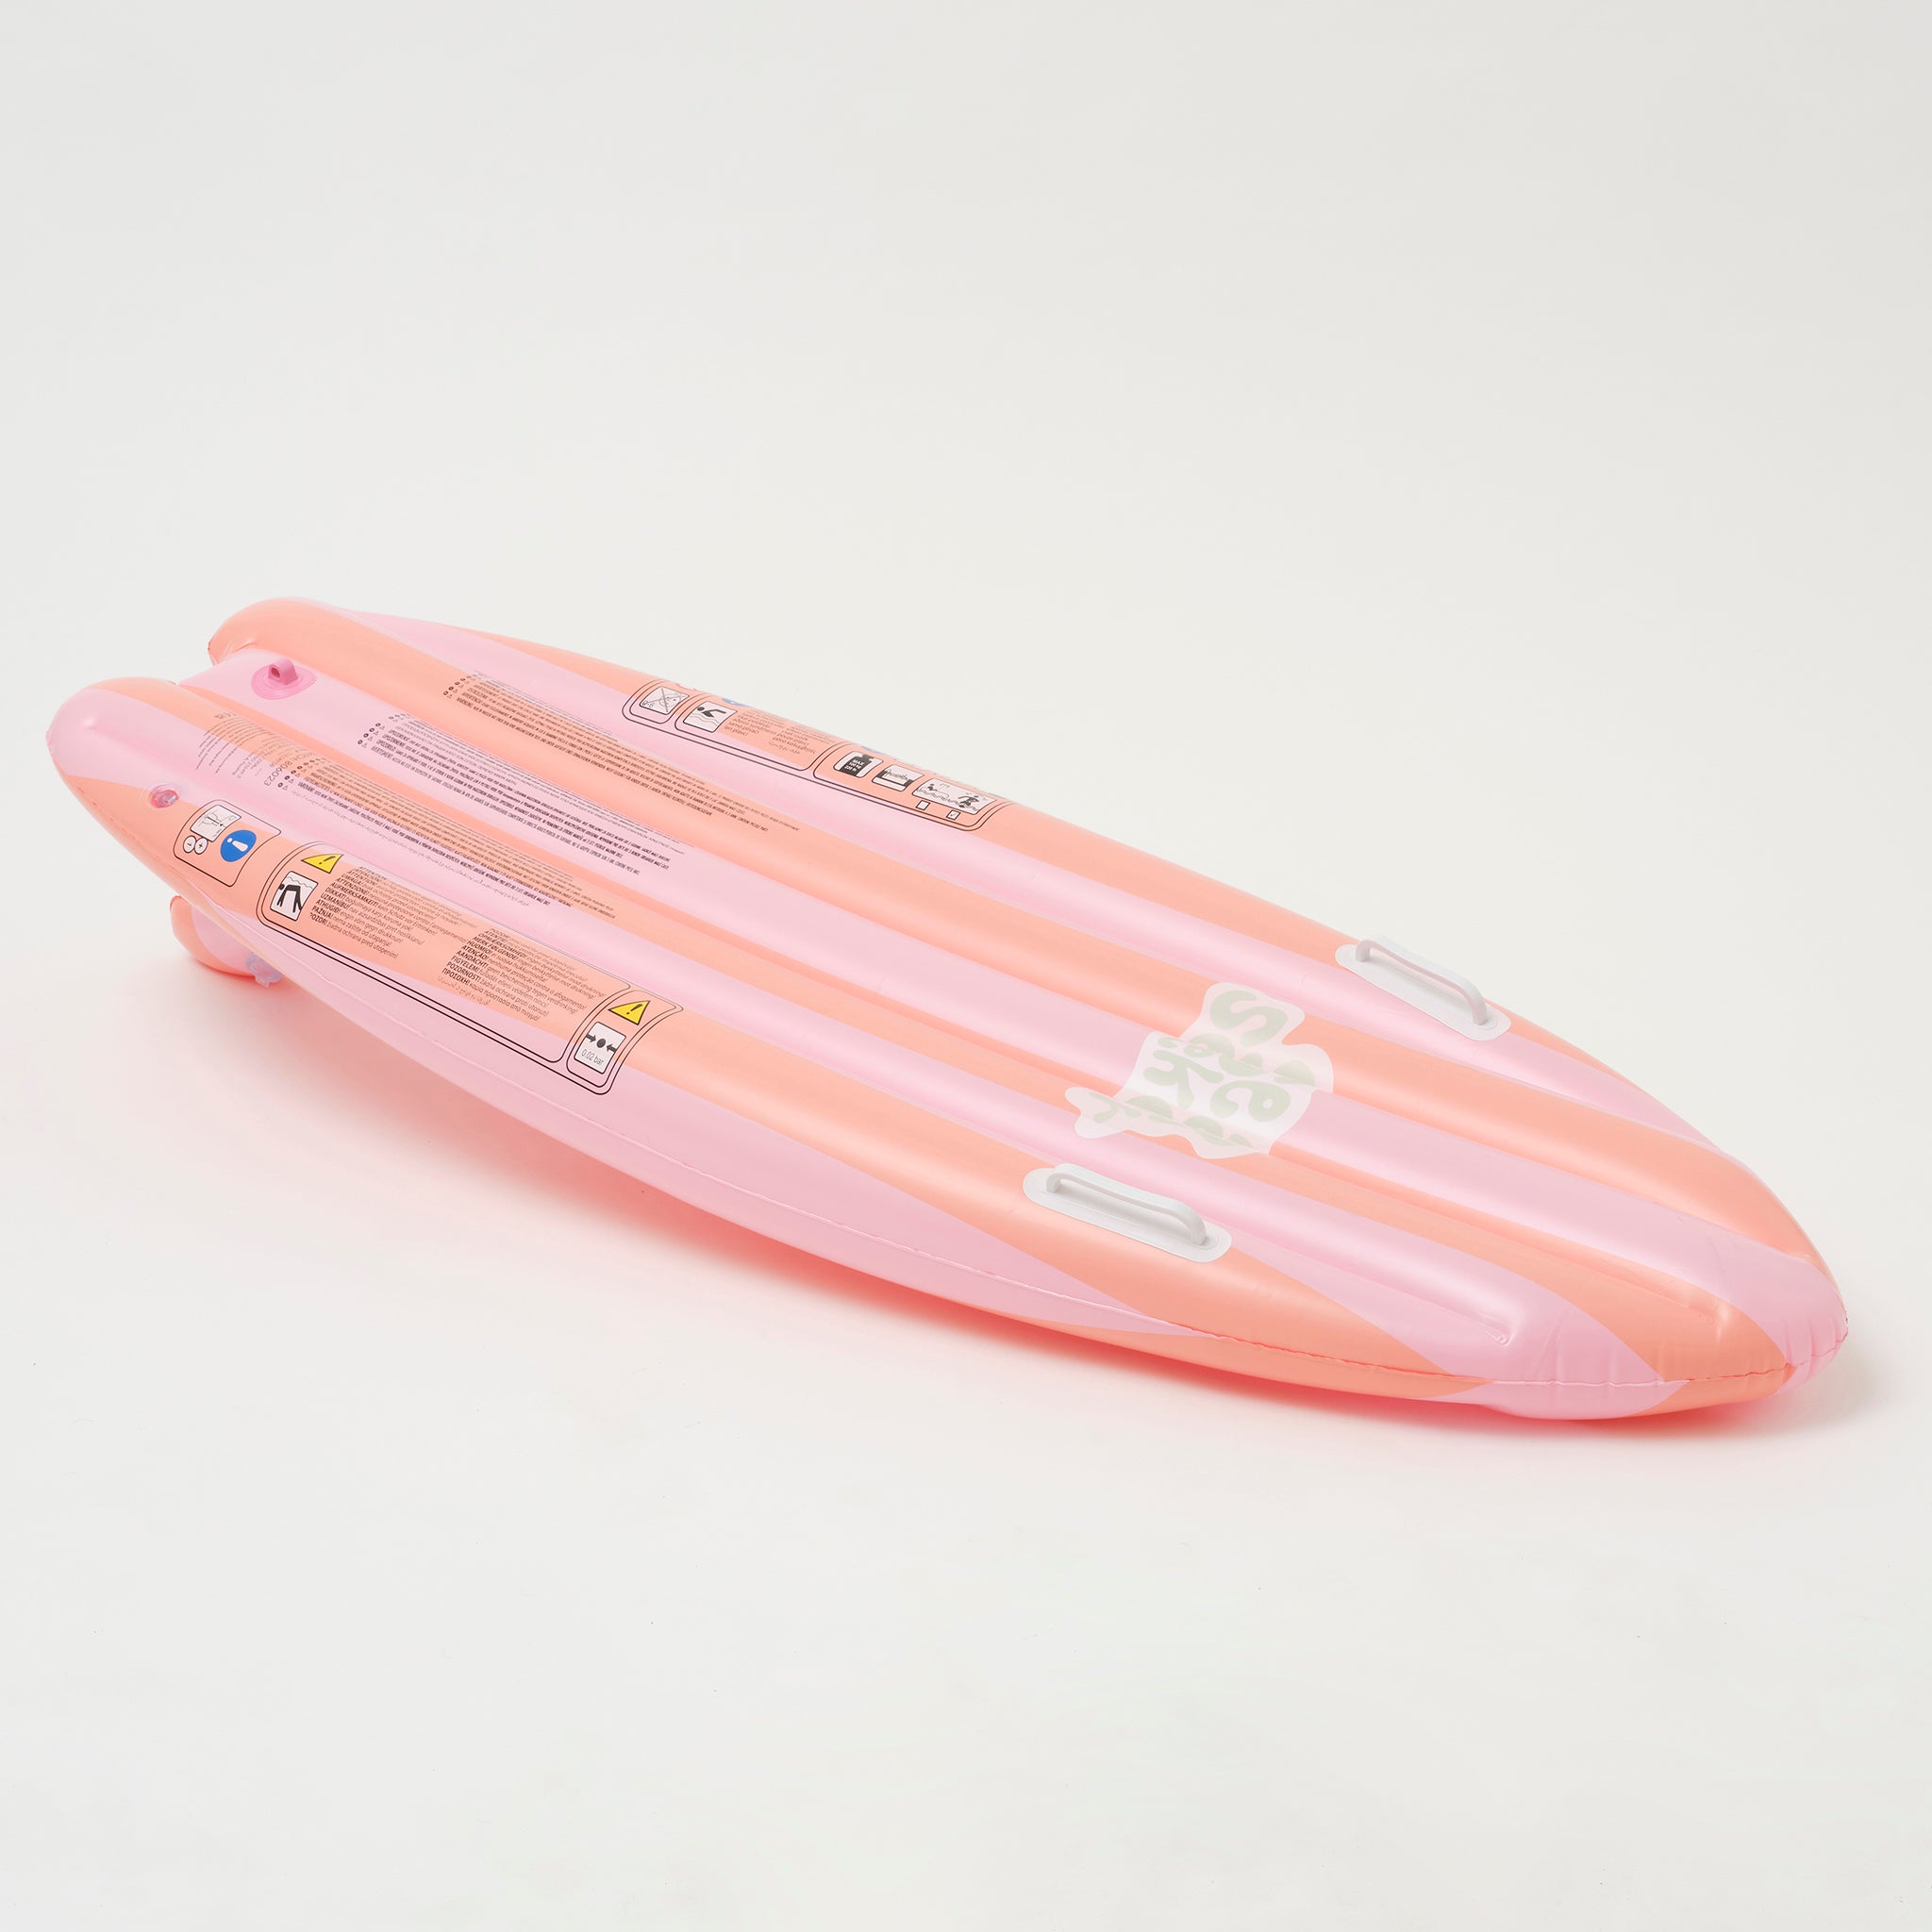 Ride With Me Surfboard Float | Sea Seeker Strawberry